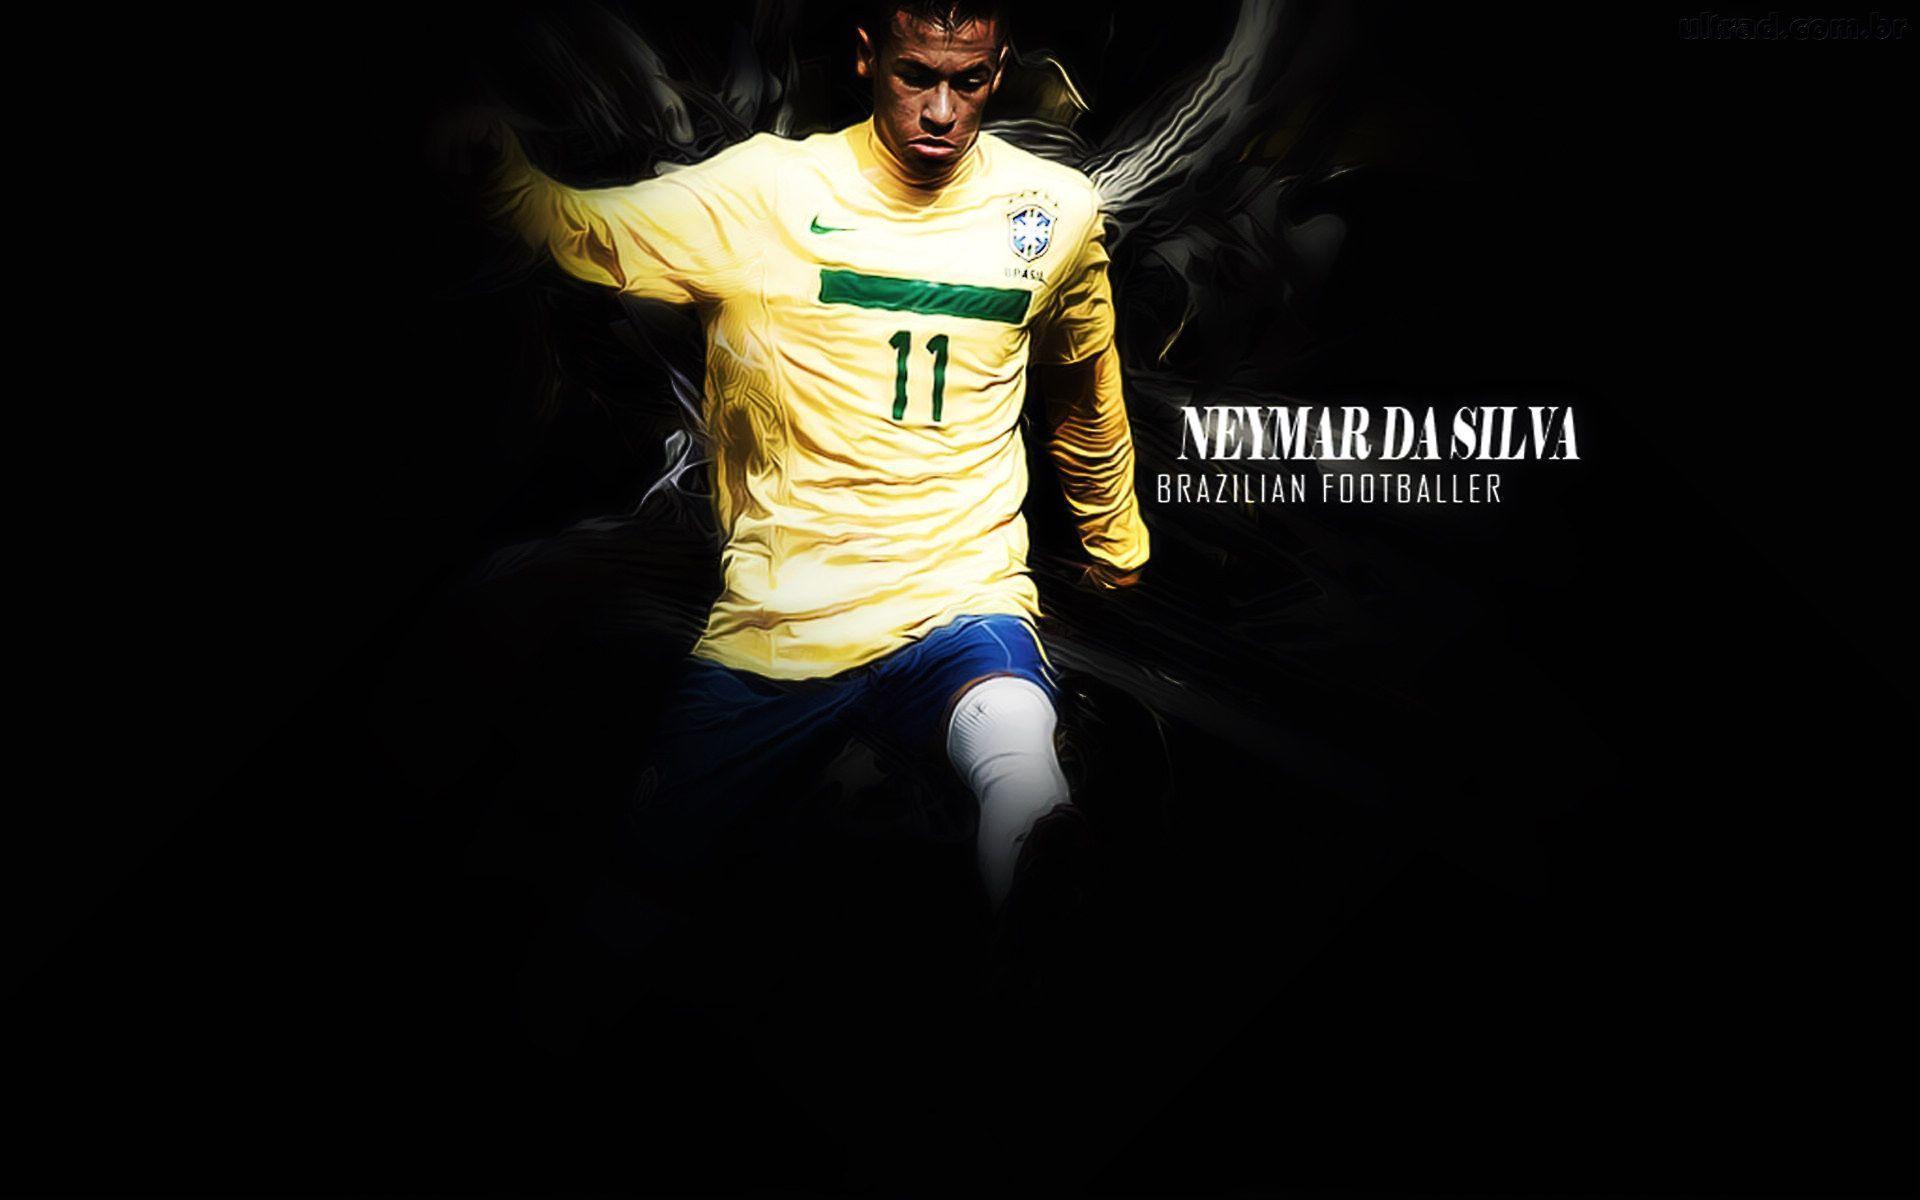 Neymar wallpaper. Barcelona and Brazil